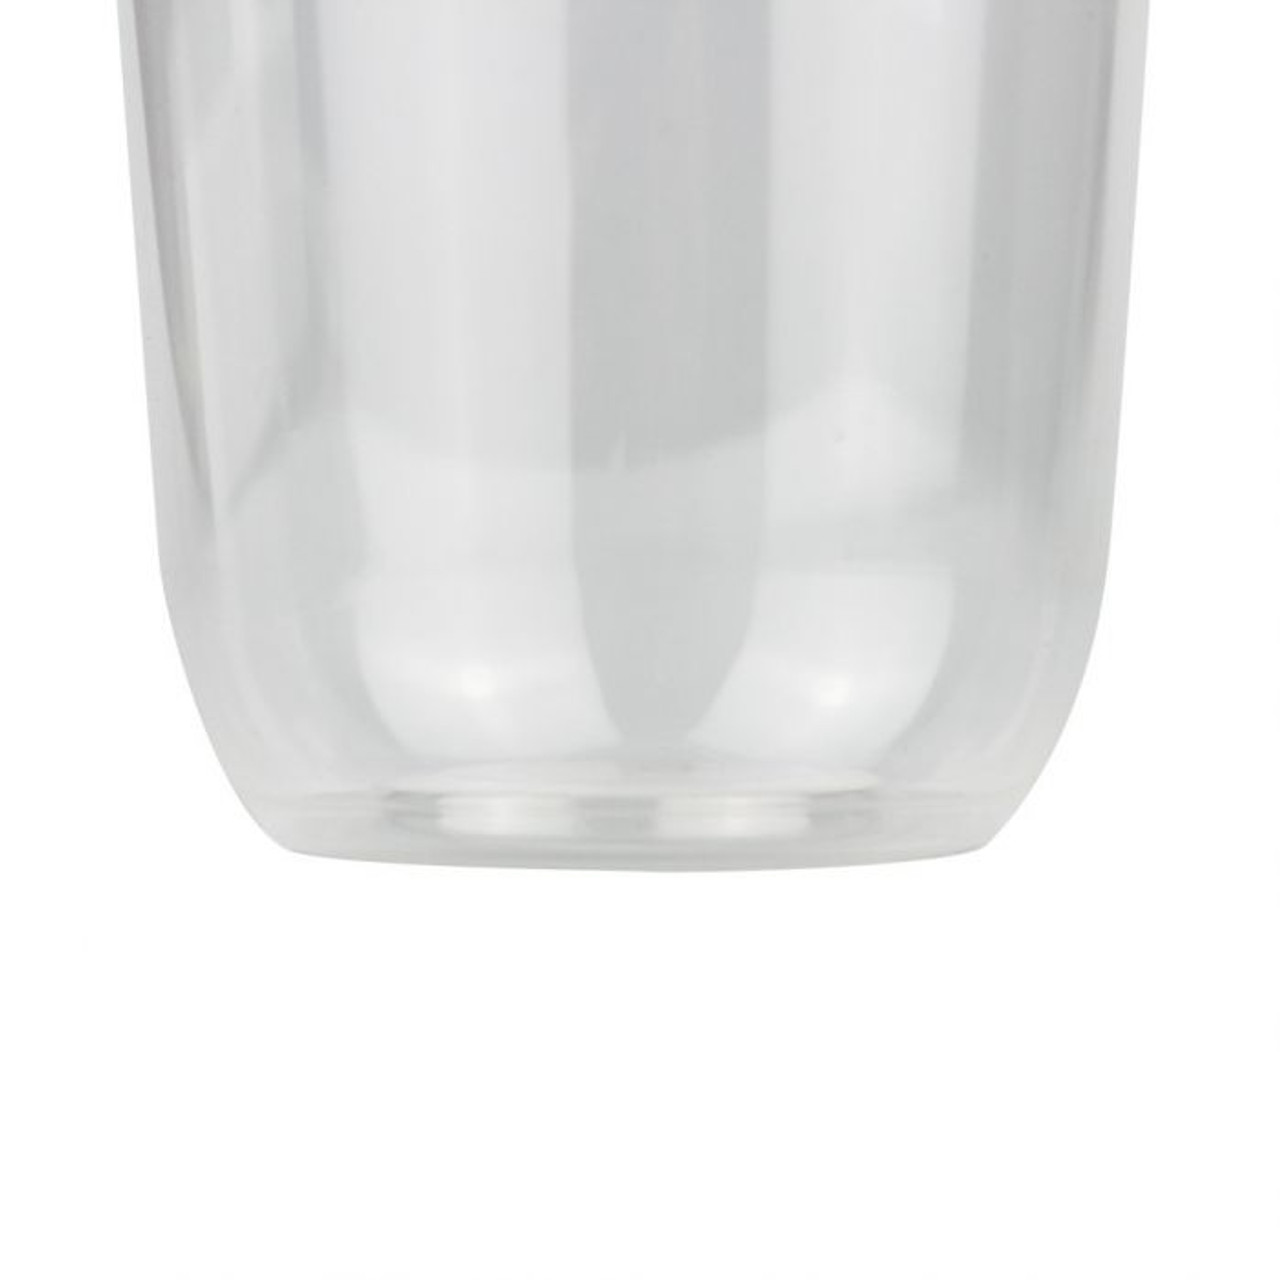 Karat 10oz Food Containers (96mm), White - 1,000 Pcs